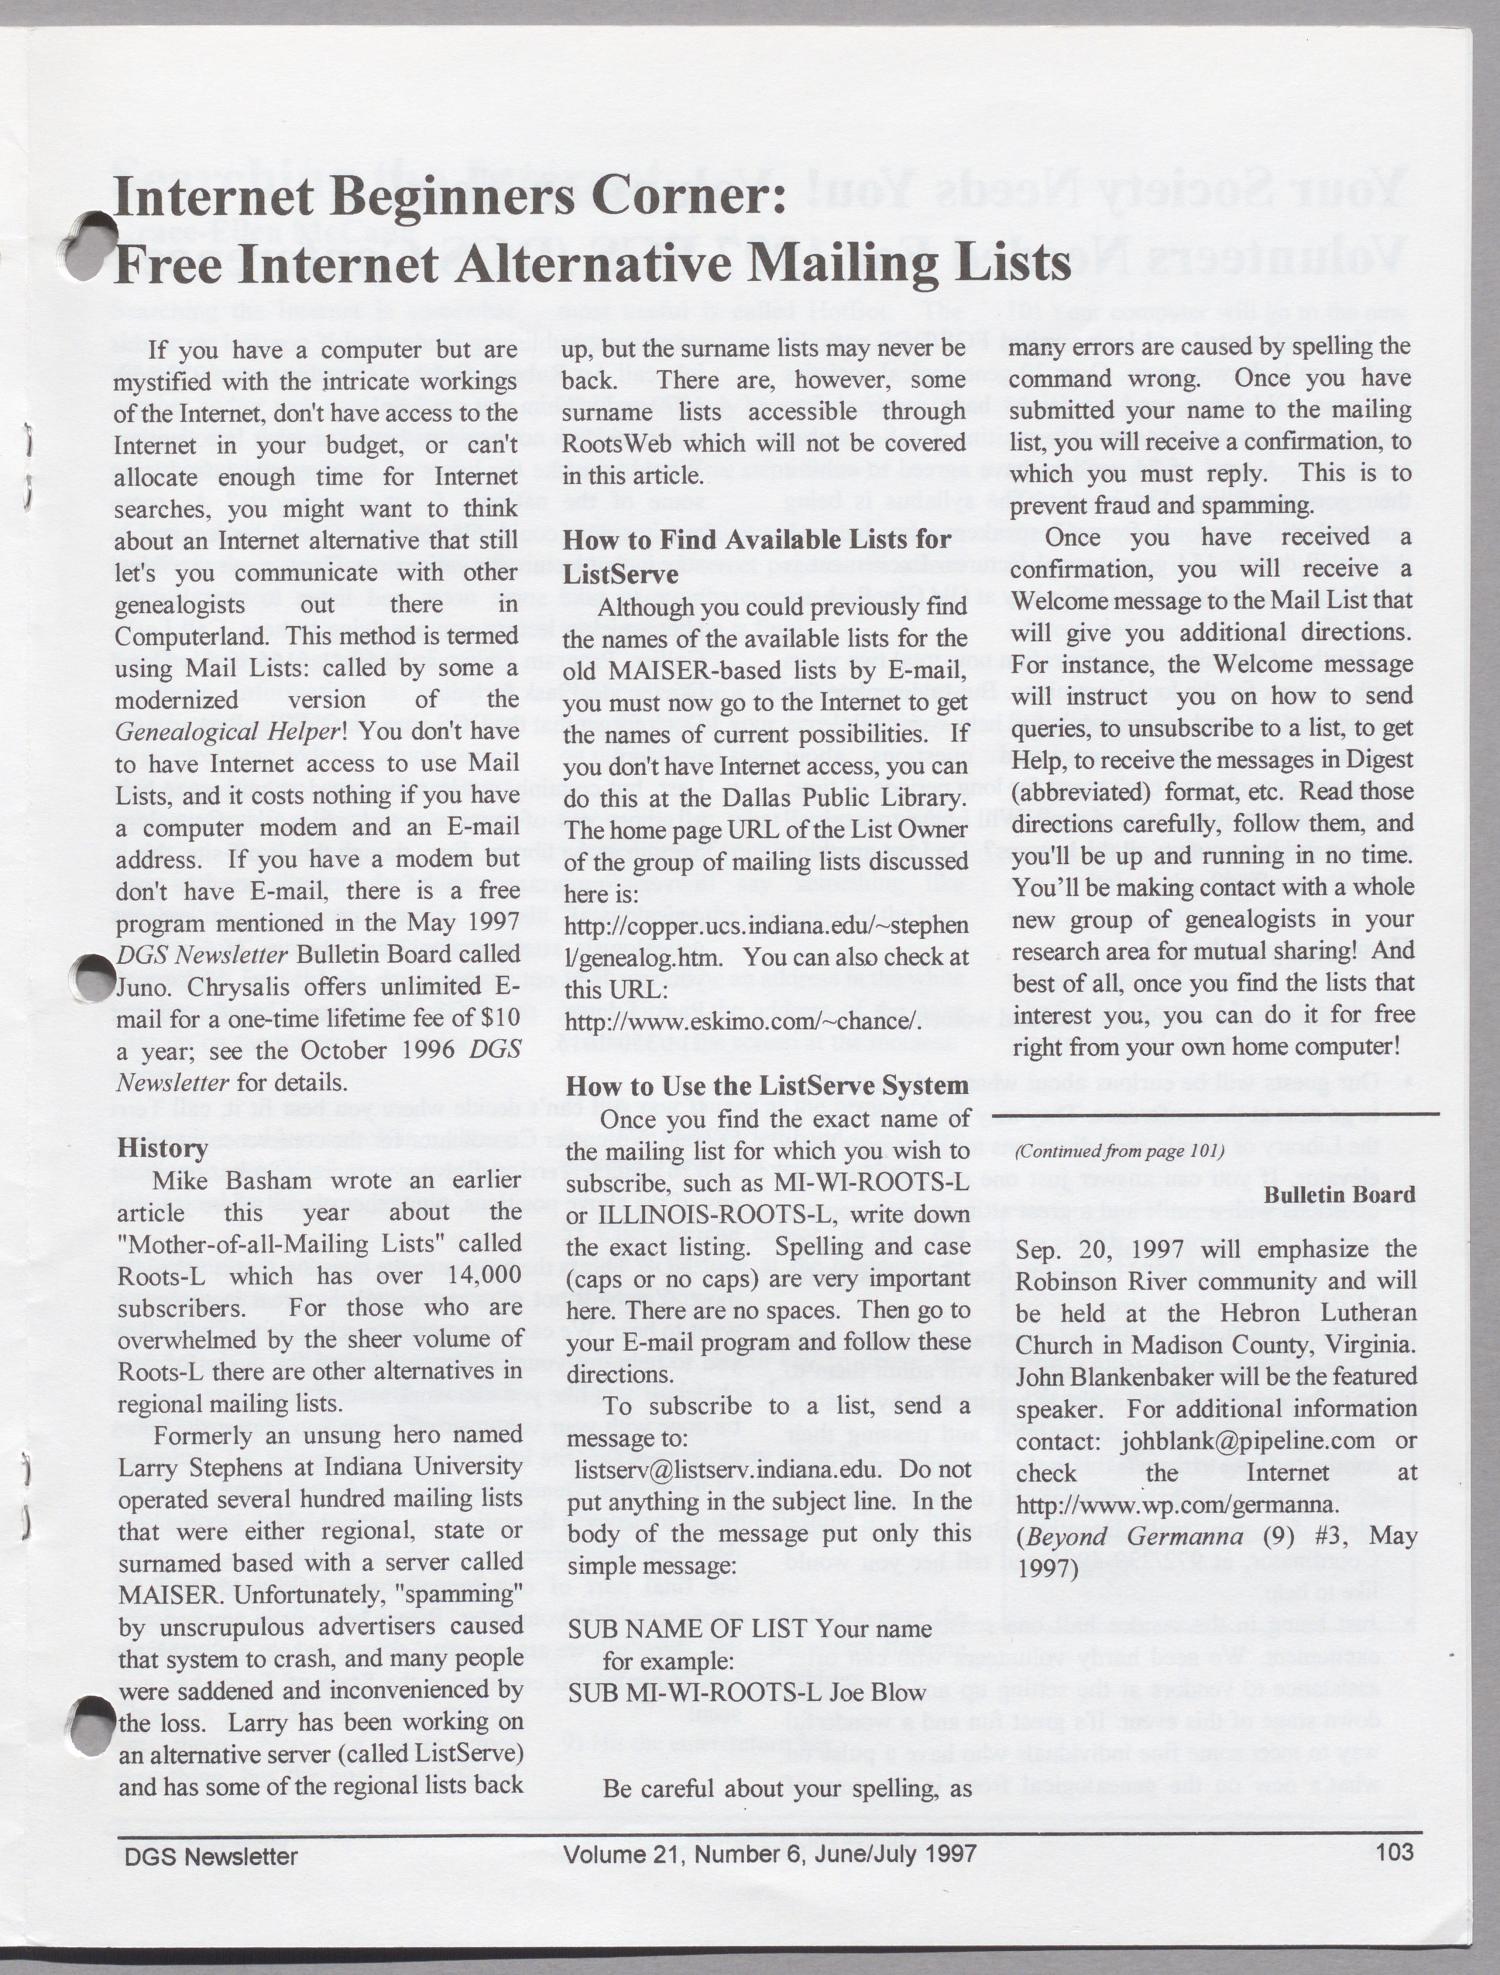 DGS Newsletter, Volume 21, Number 6, June-July 1997
                                                
                                                    103
                                                